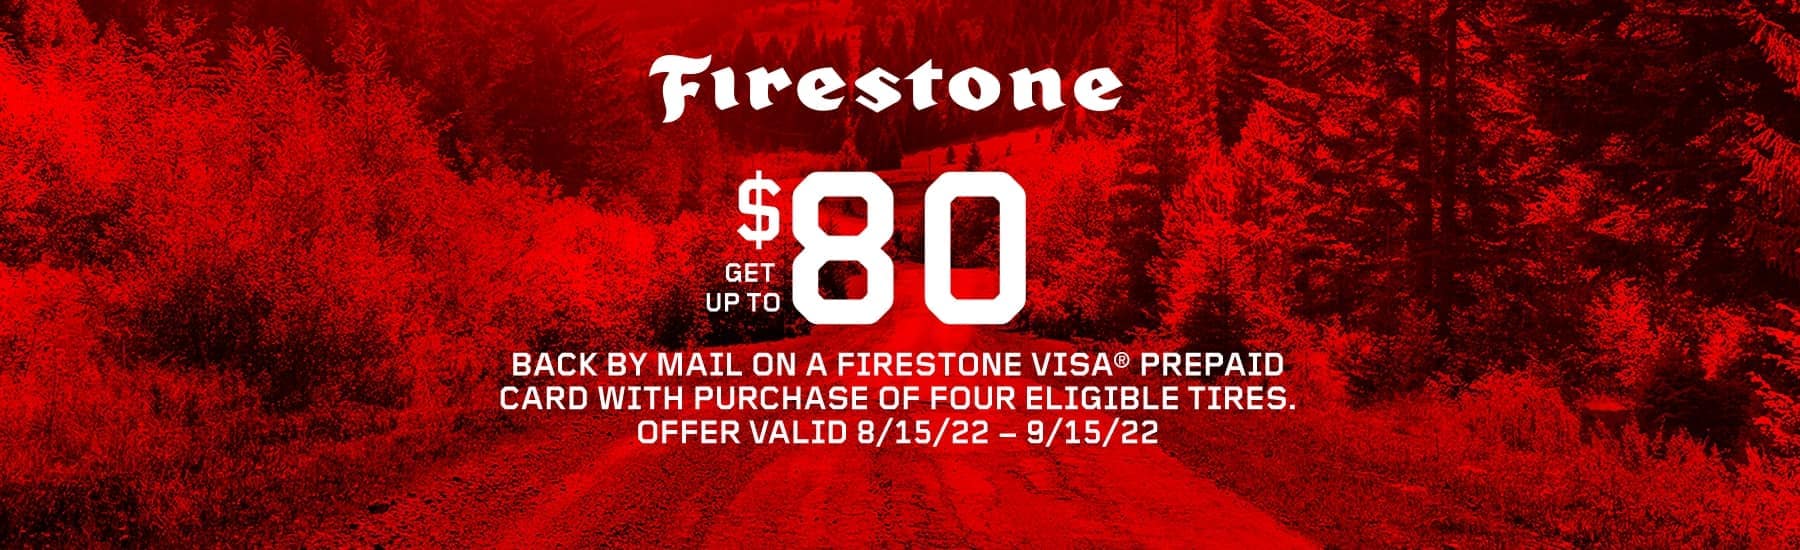 firestone specials